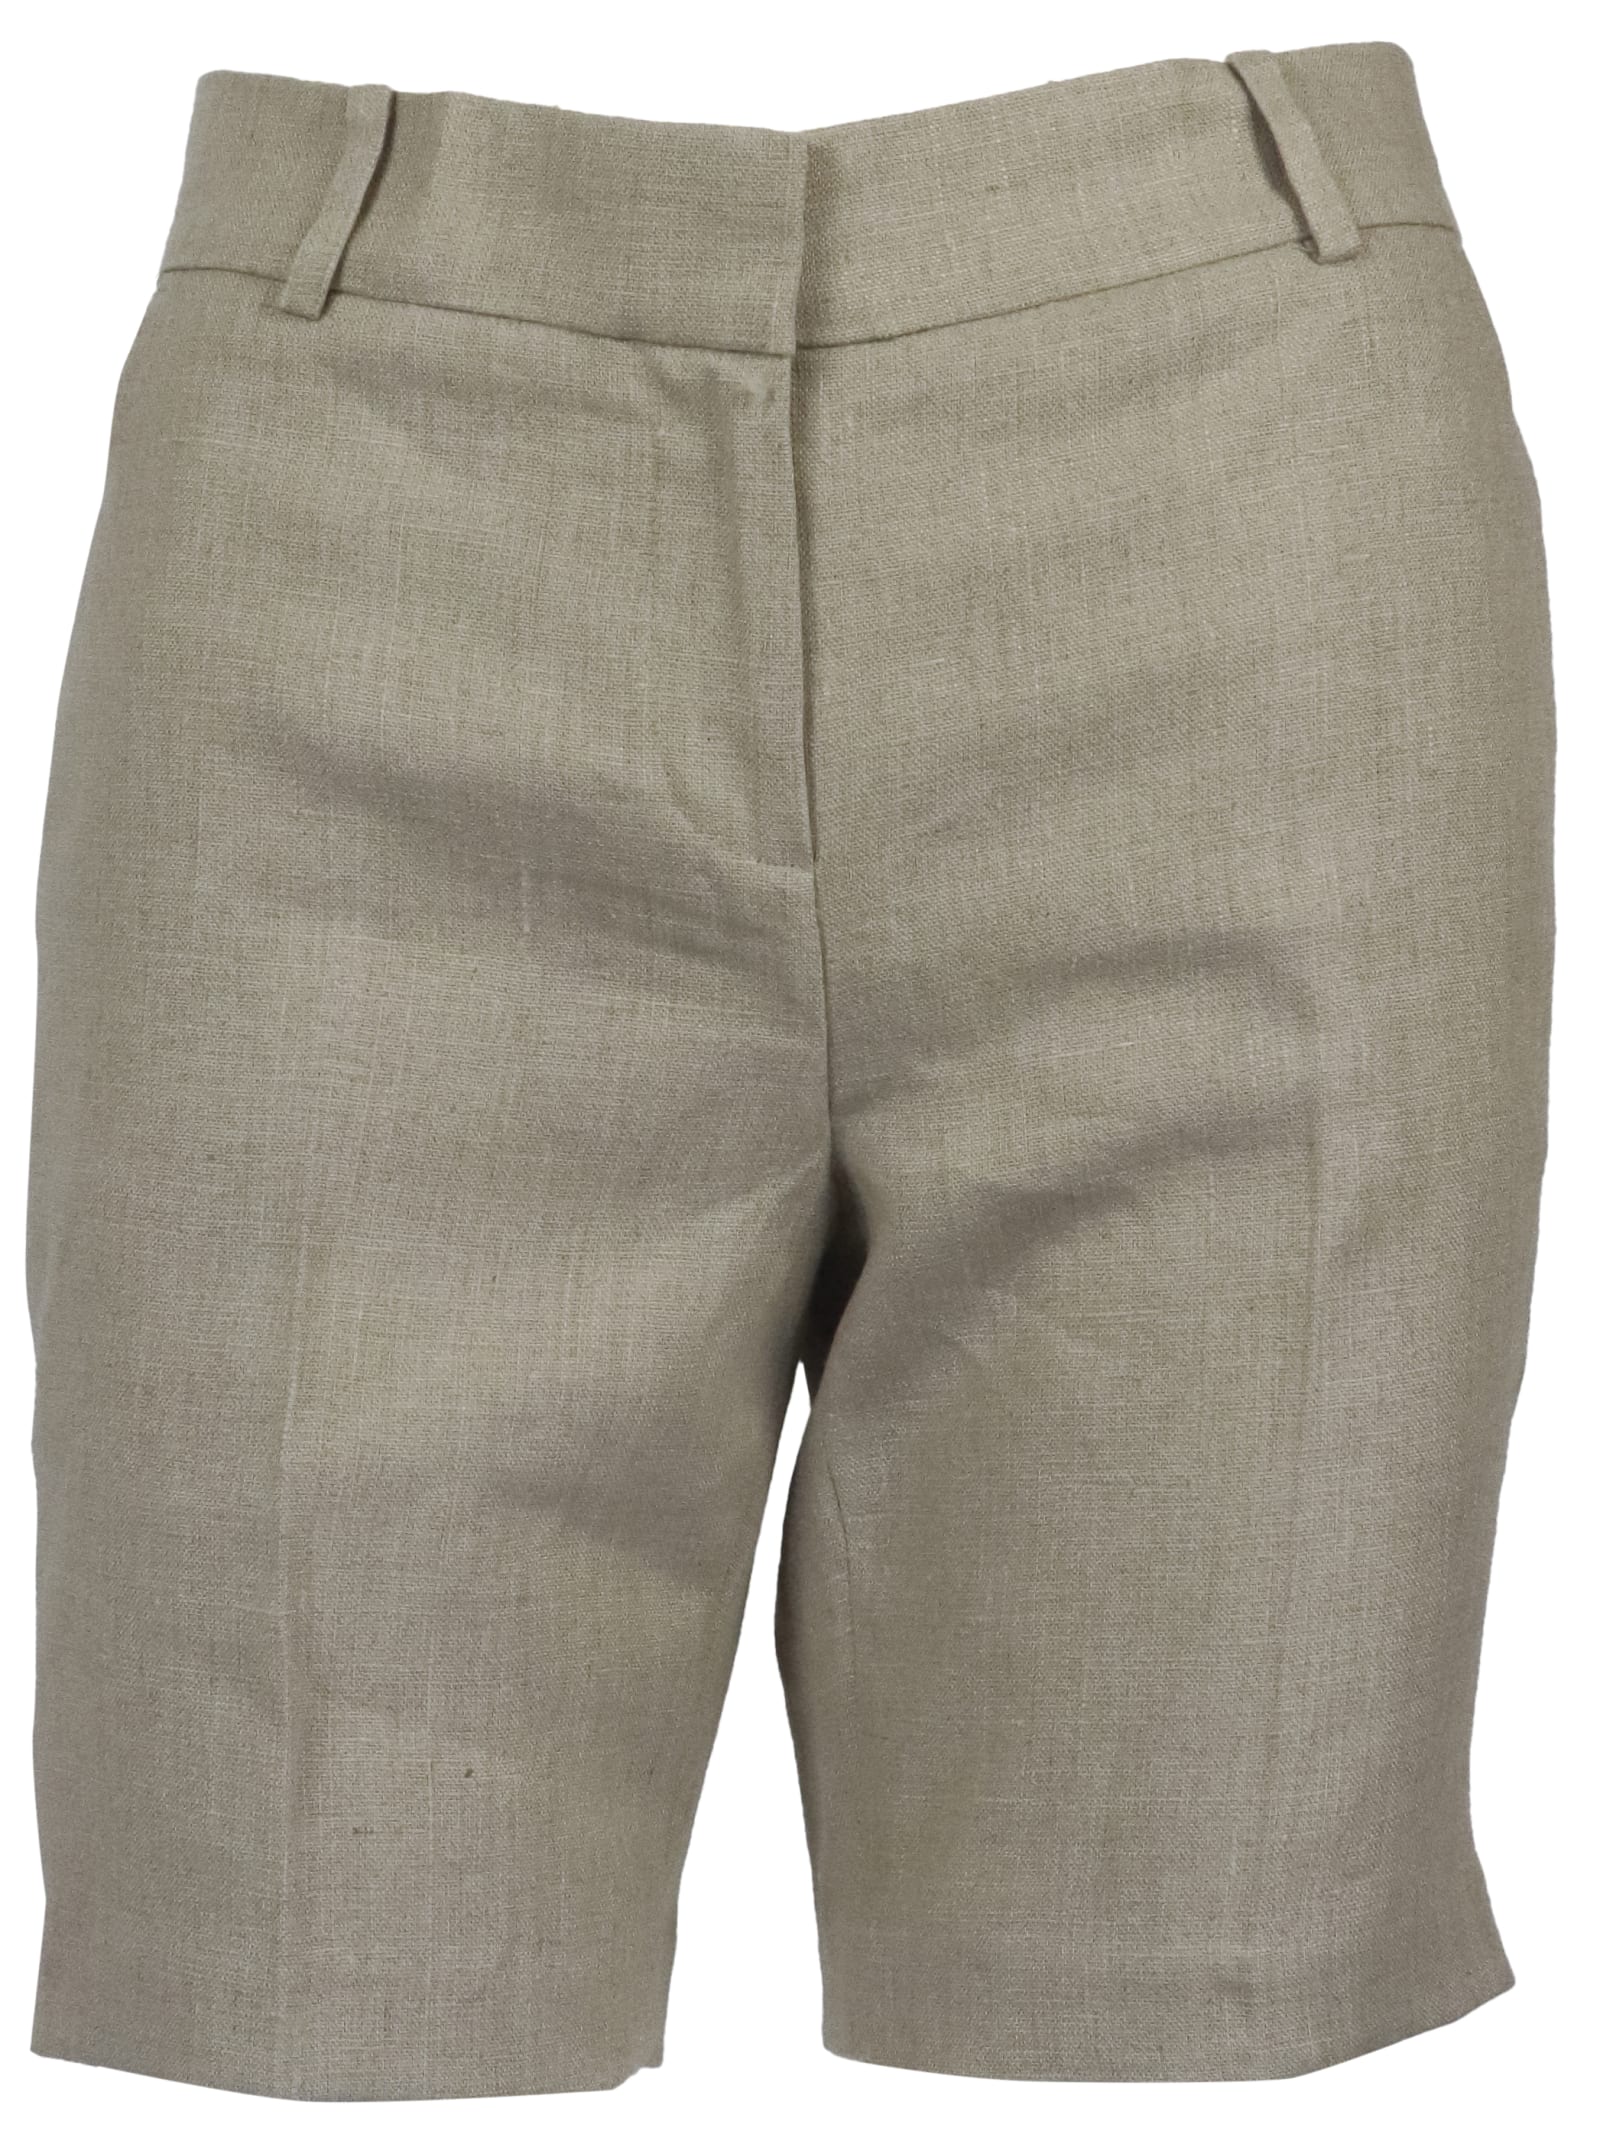 Michael Kors Washed Linen Shorts